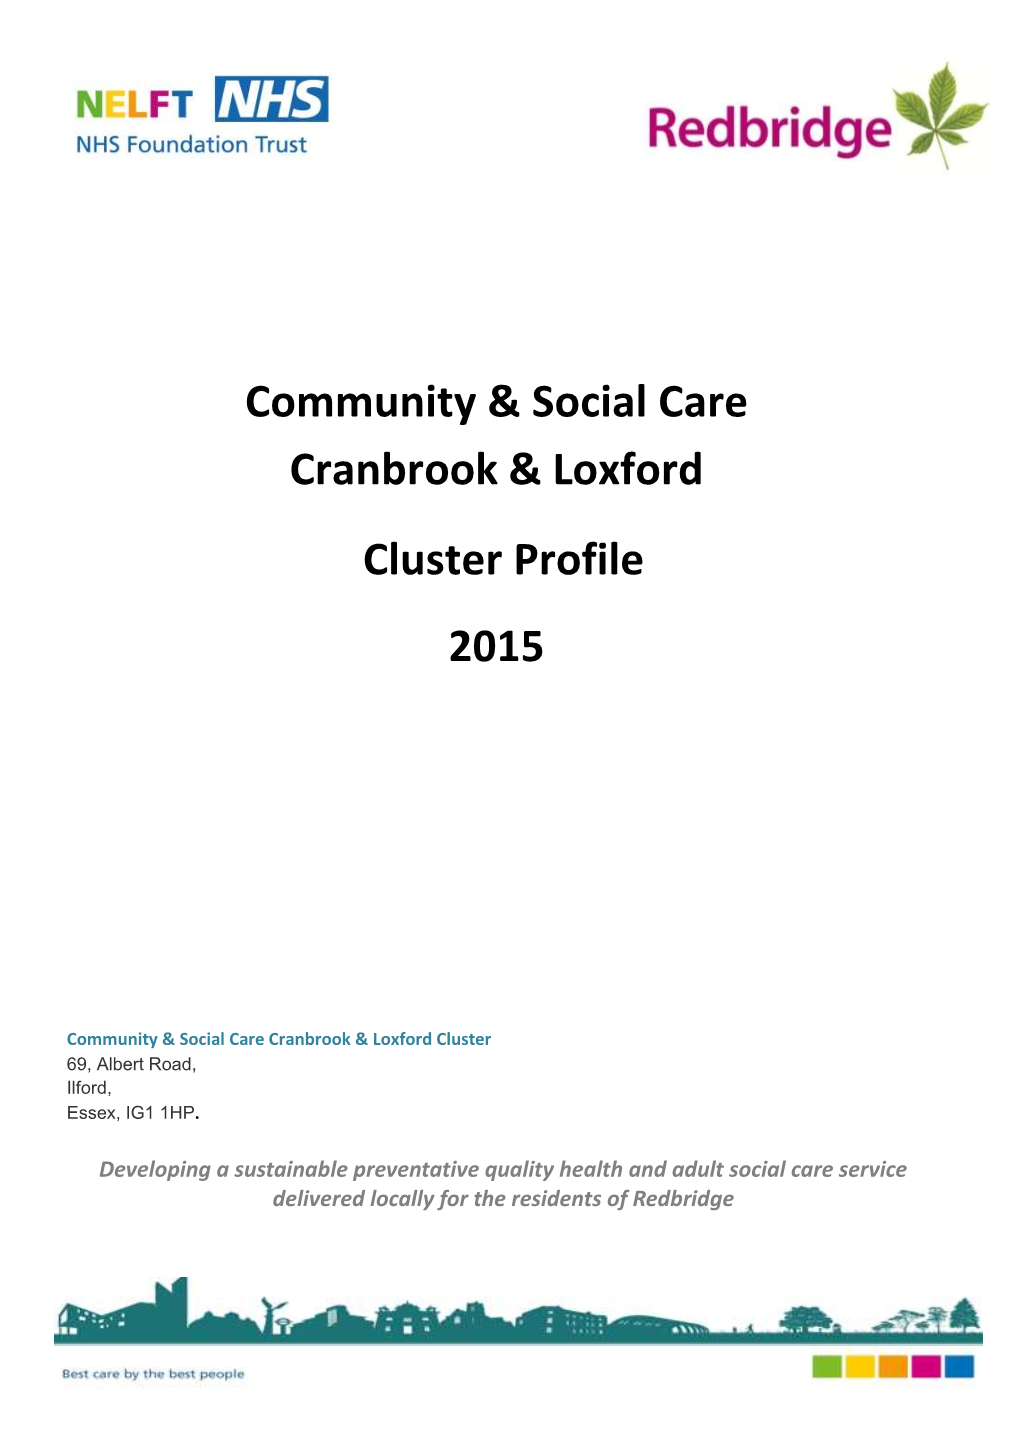 Community & Social Care Cranbrook & Loxford Cluster Profile 2015